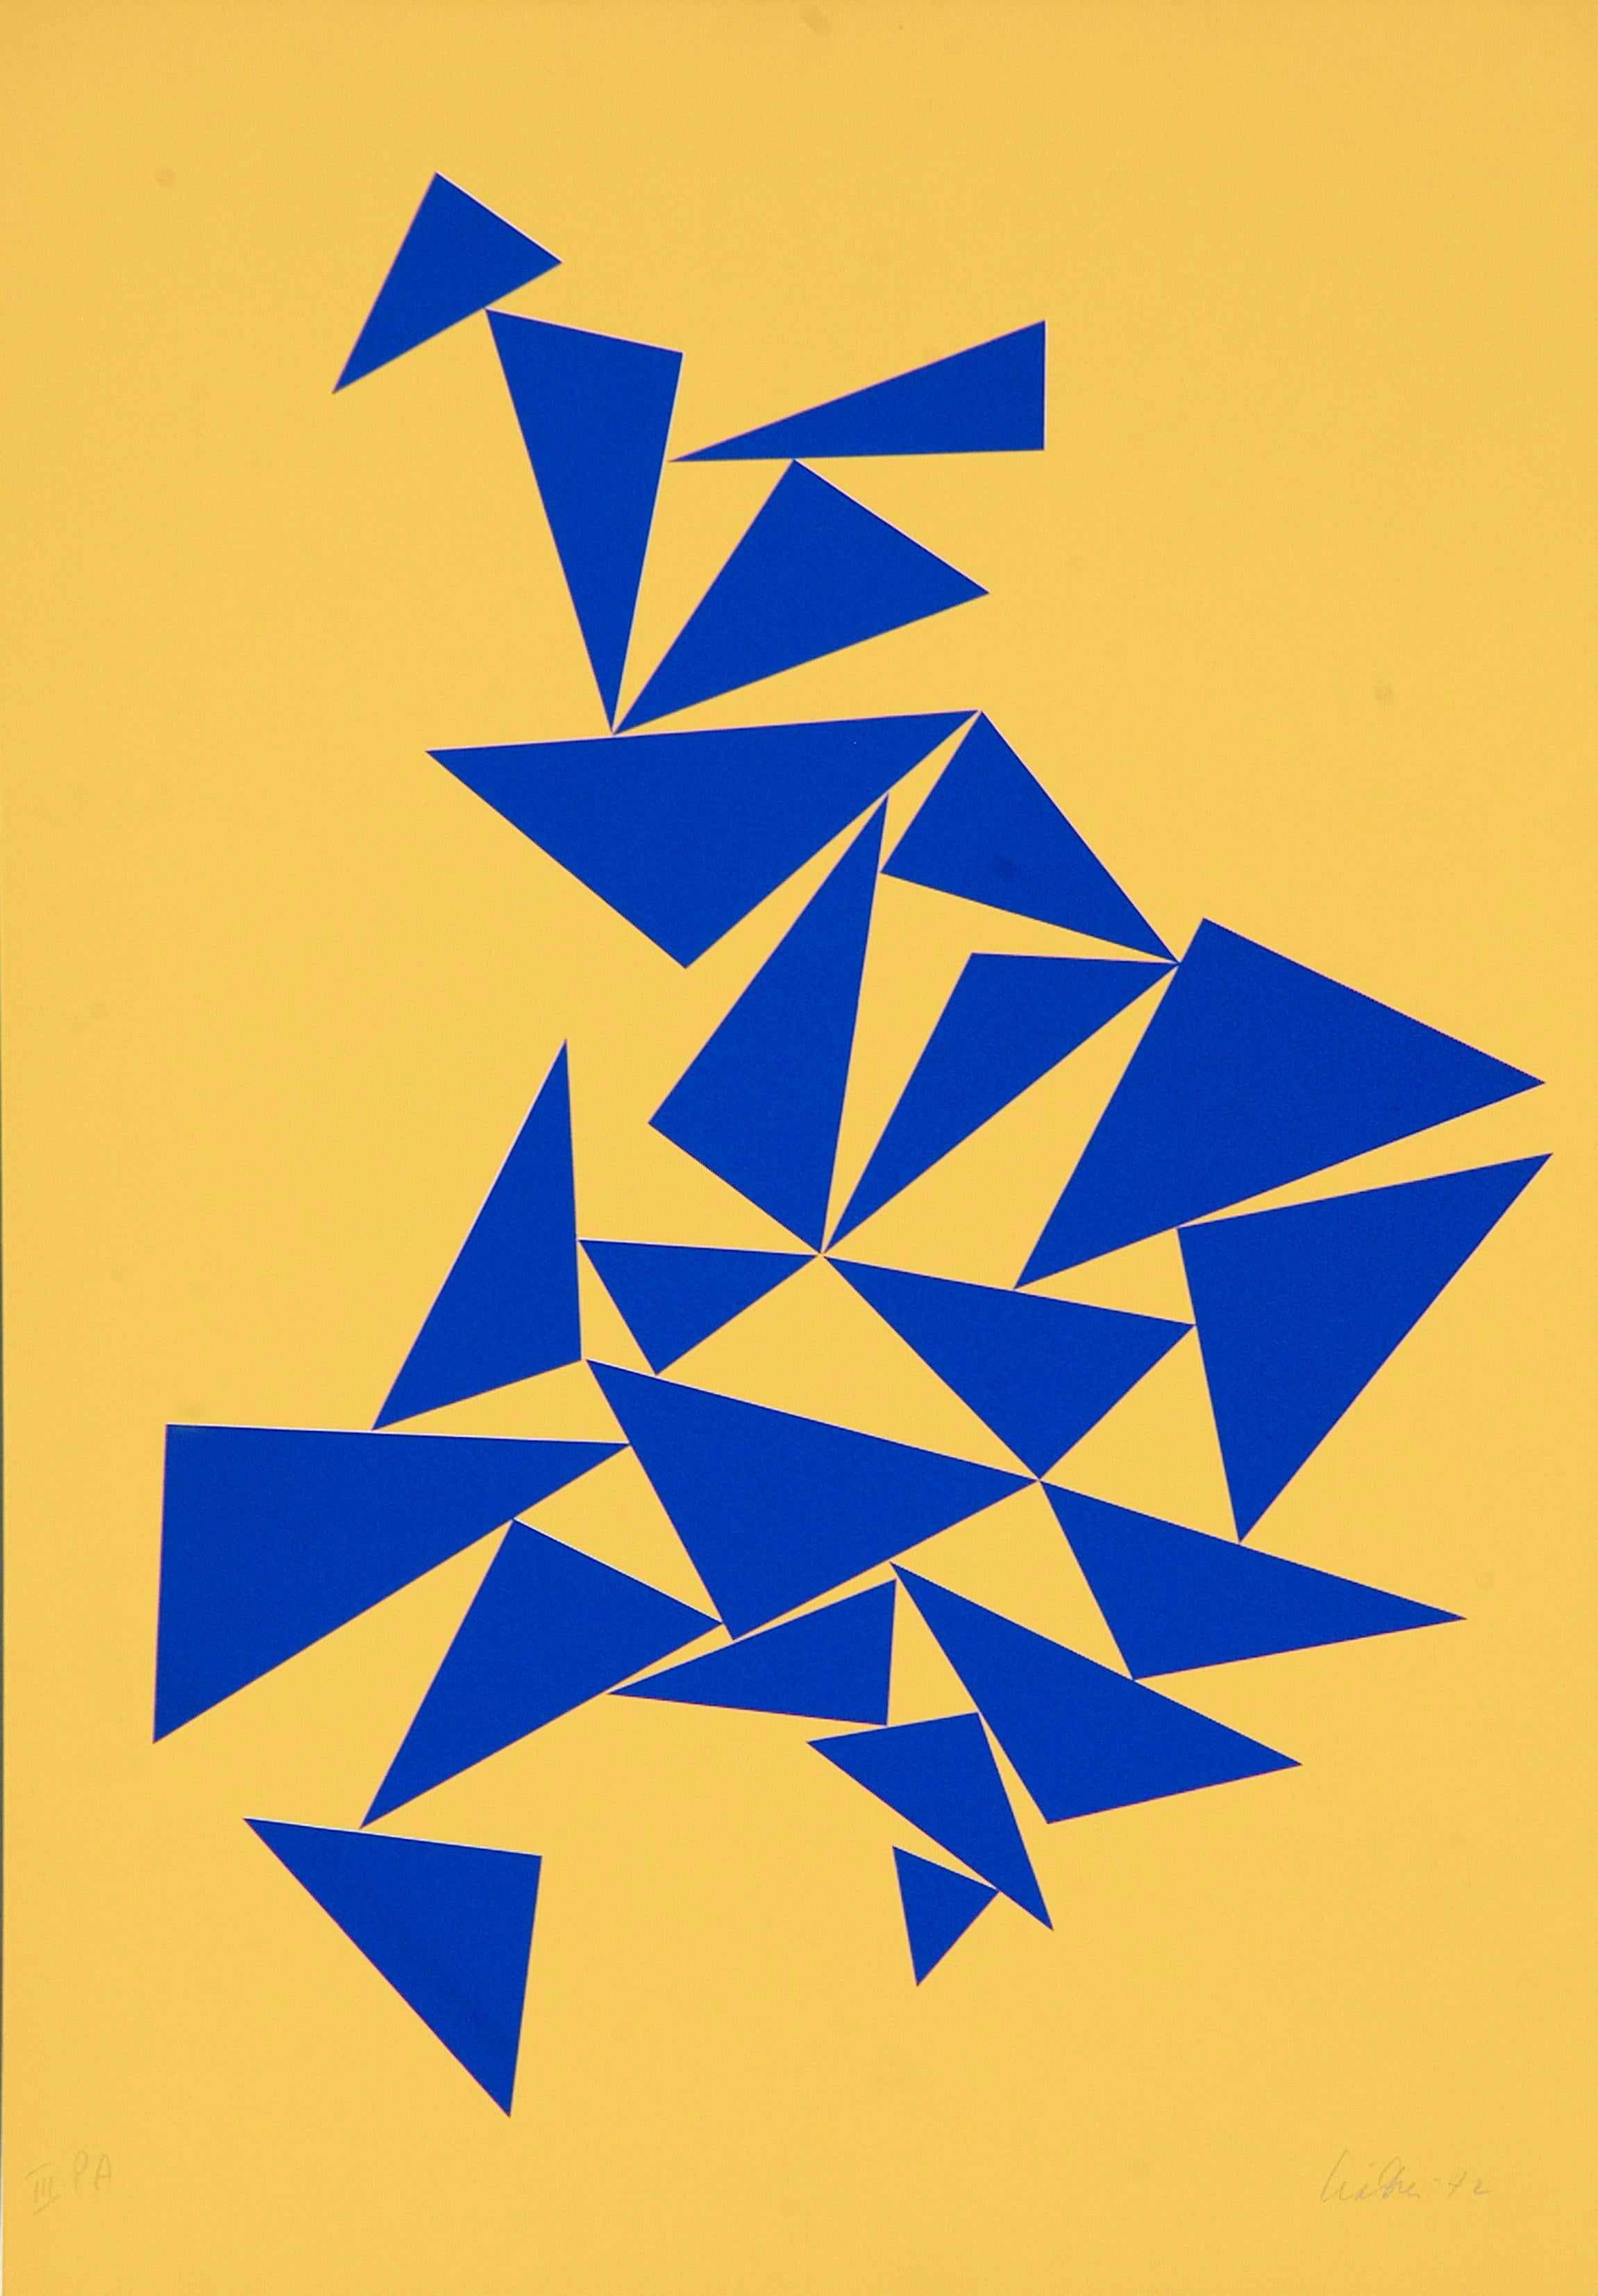 Triangles on Yellow - Screen Print by Lia Drei - 1970 ca.